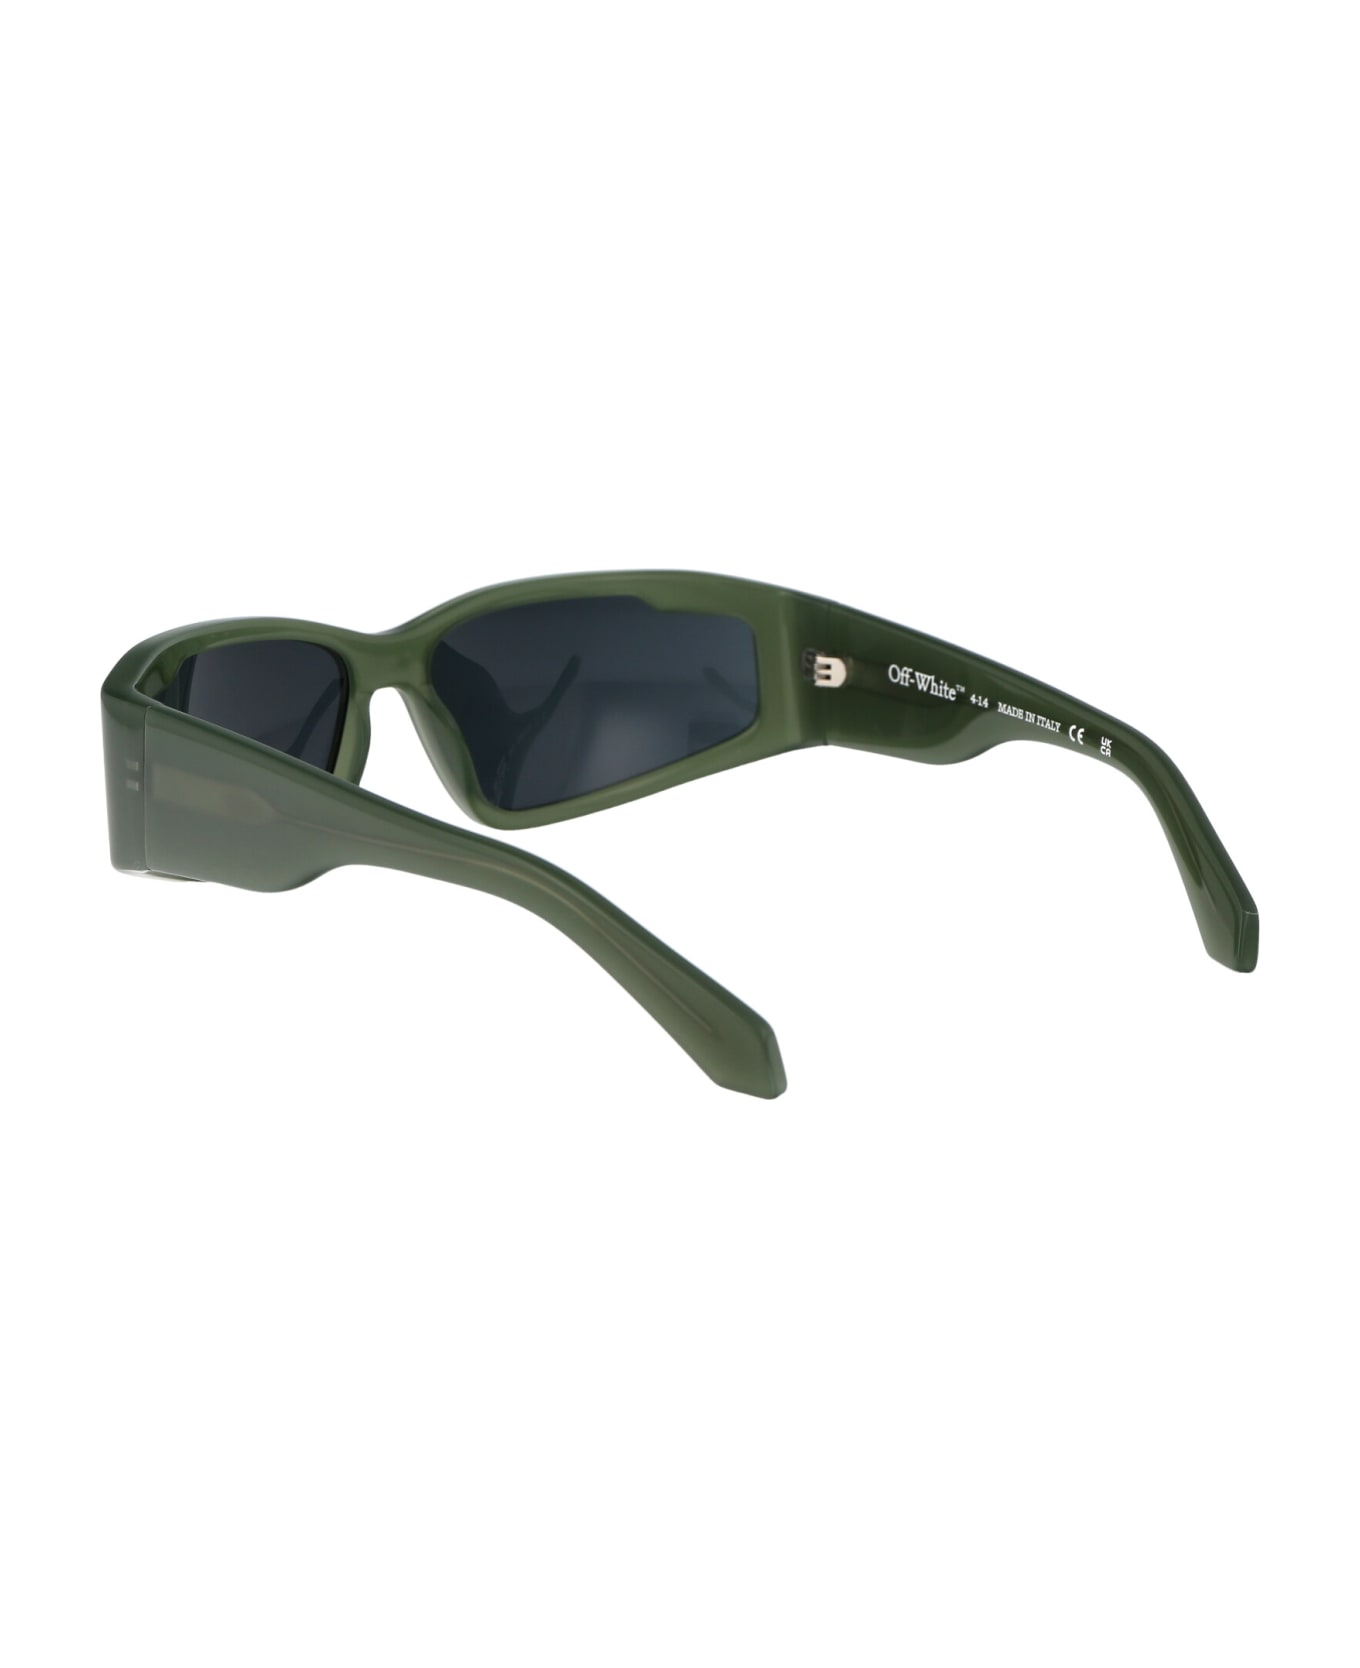 Off-White Kimball Sunglasses - 5707 OLIVE GREEN  サングラス